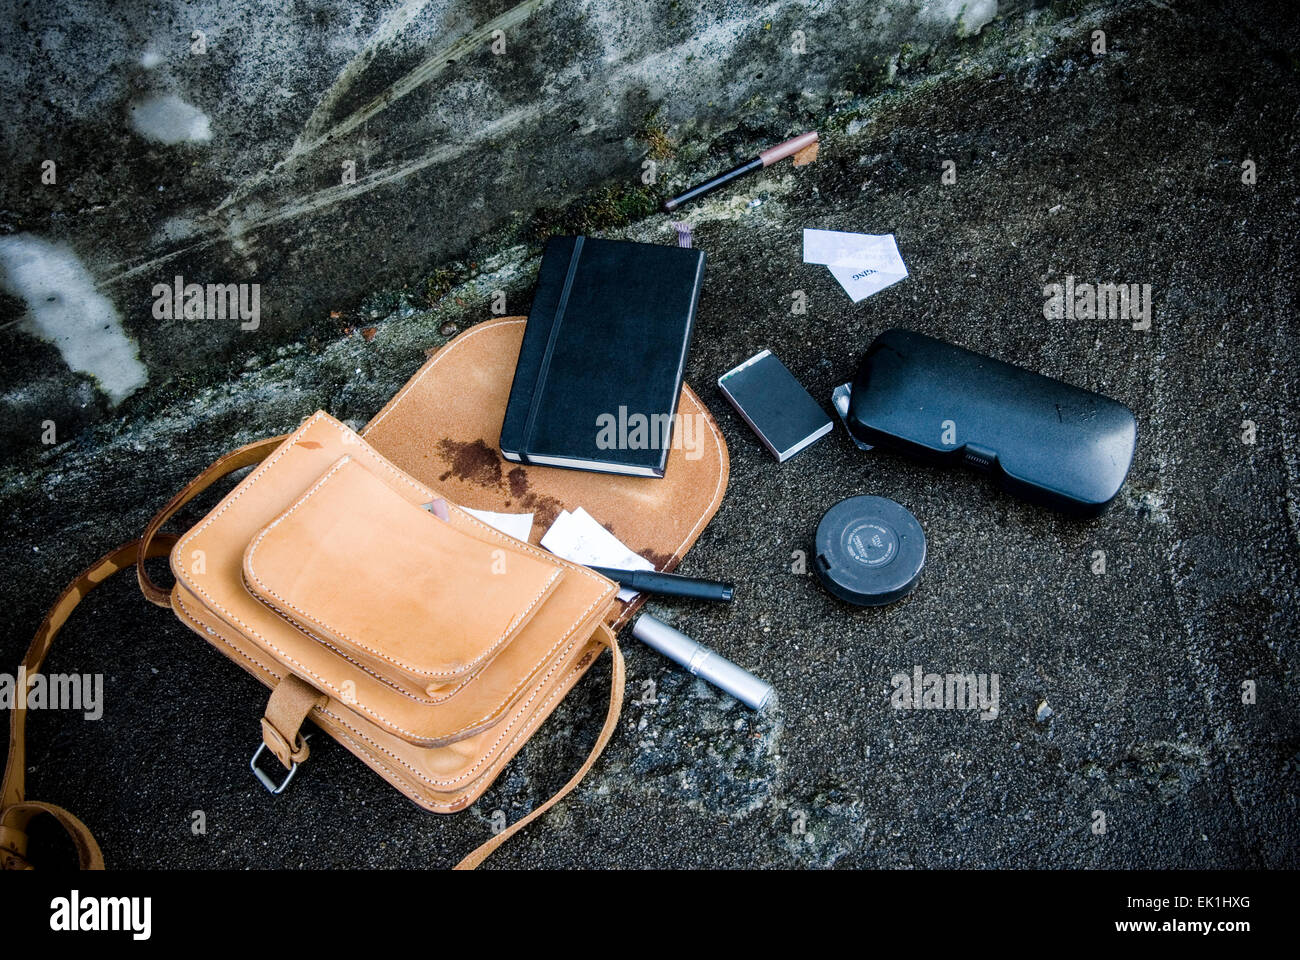 stolen purse Stock Photo - Alamy